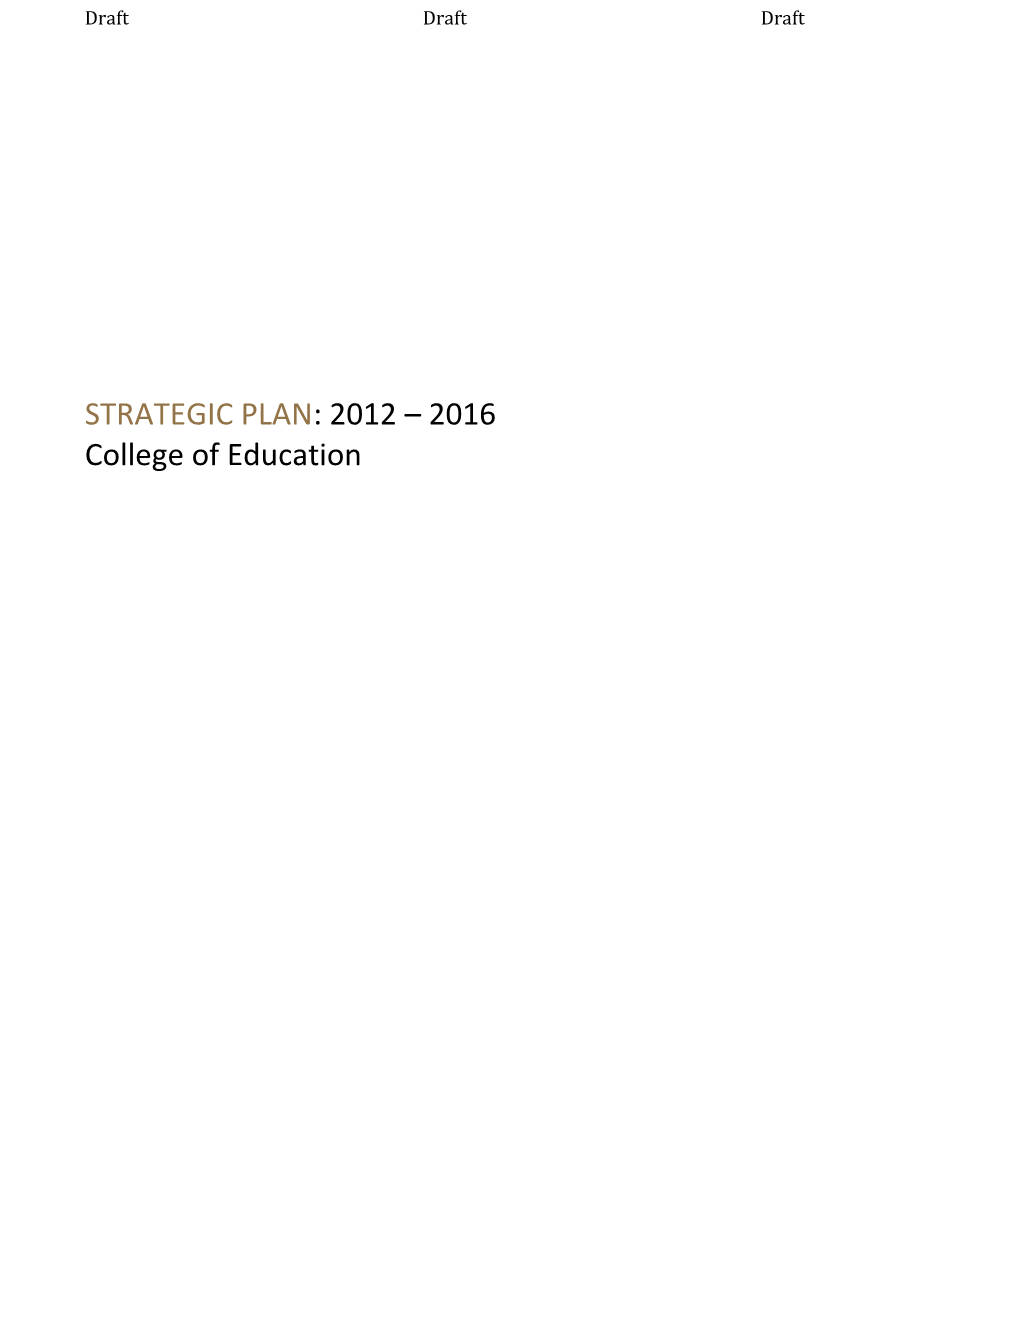 The Strategic Plan 2012-2016 College of Education, University of Idaho